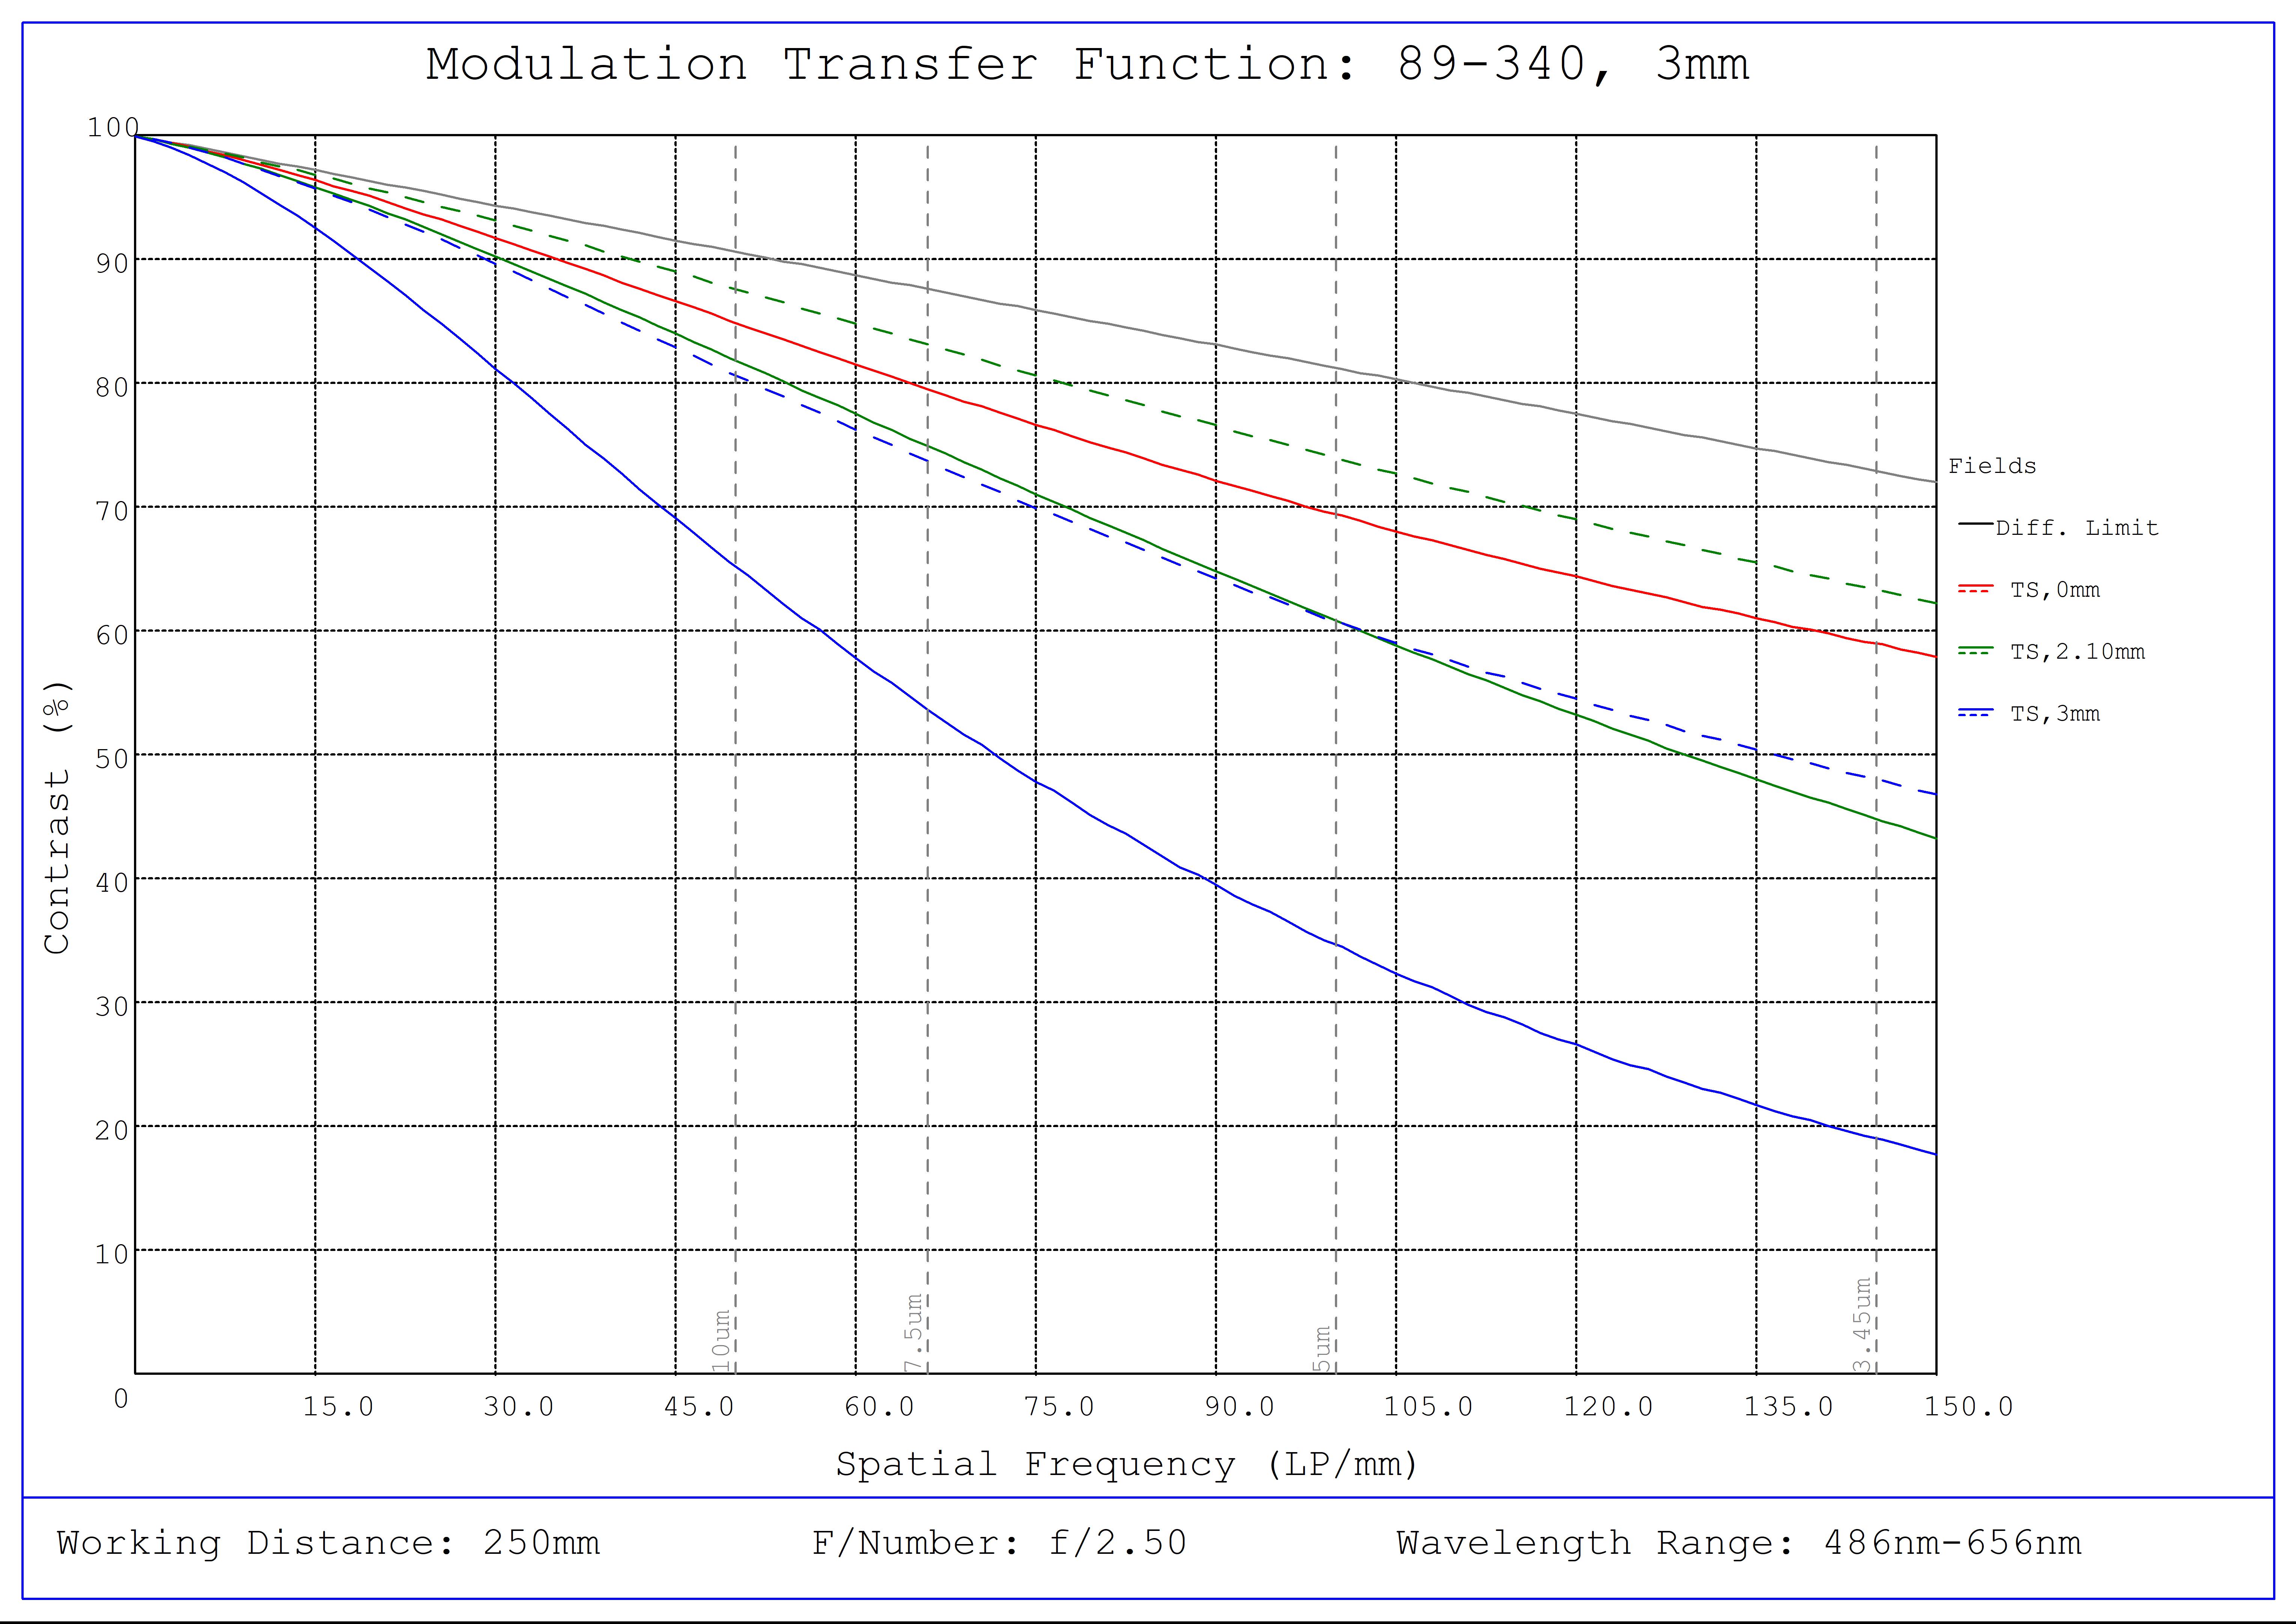 #20-055, 3mm FL f/2.5, IR-Cut Blue Series M12 Lens, Modulated Transfer Function (MTF) Plot, 250mm Working Distance, f2.5